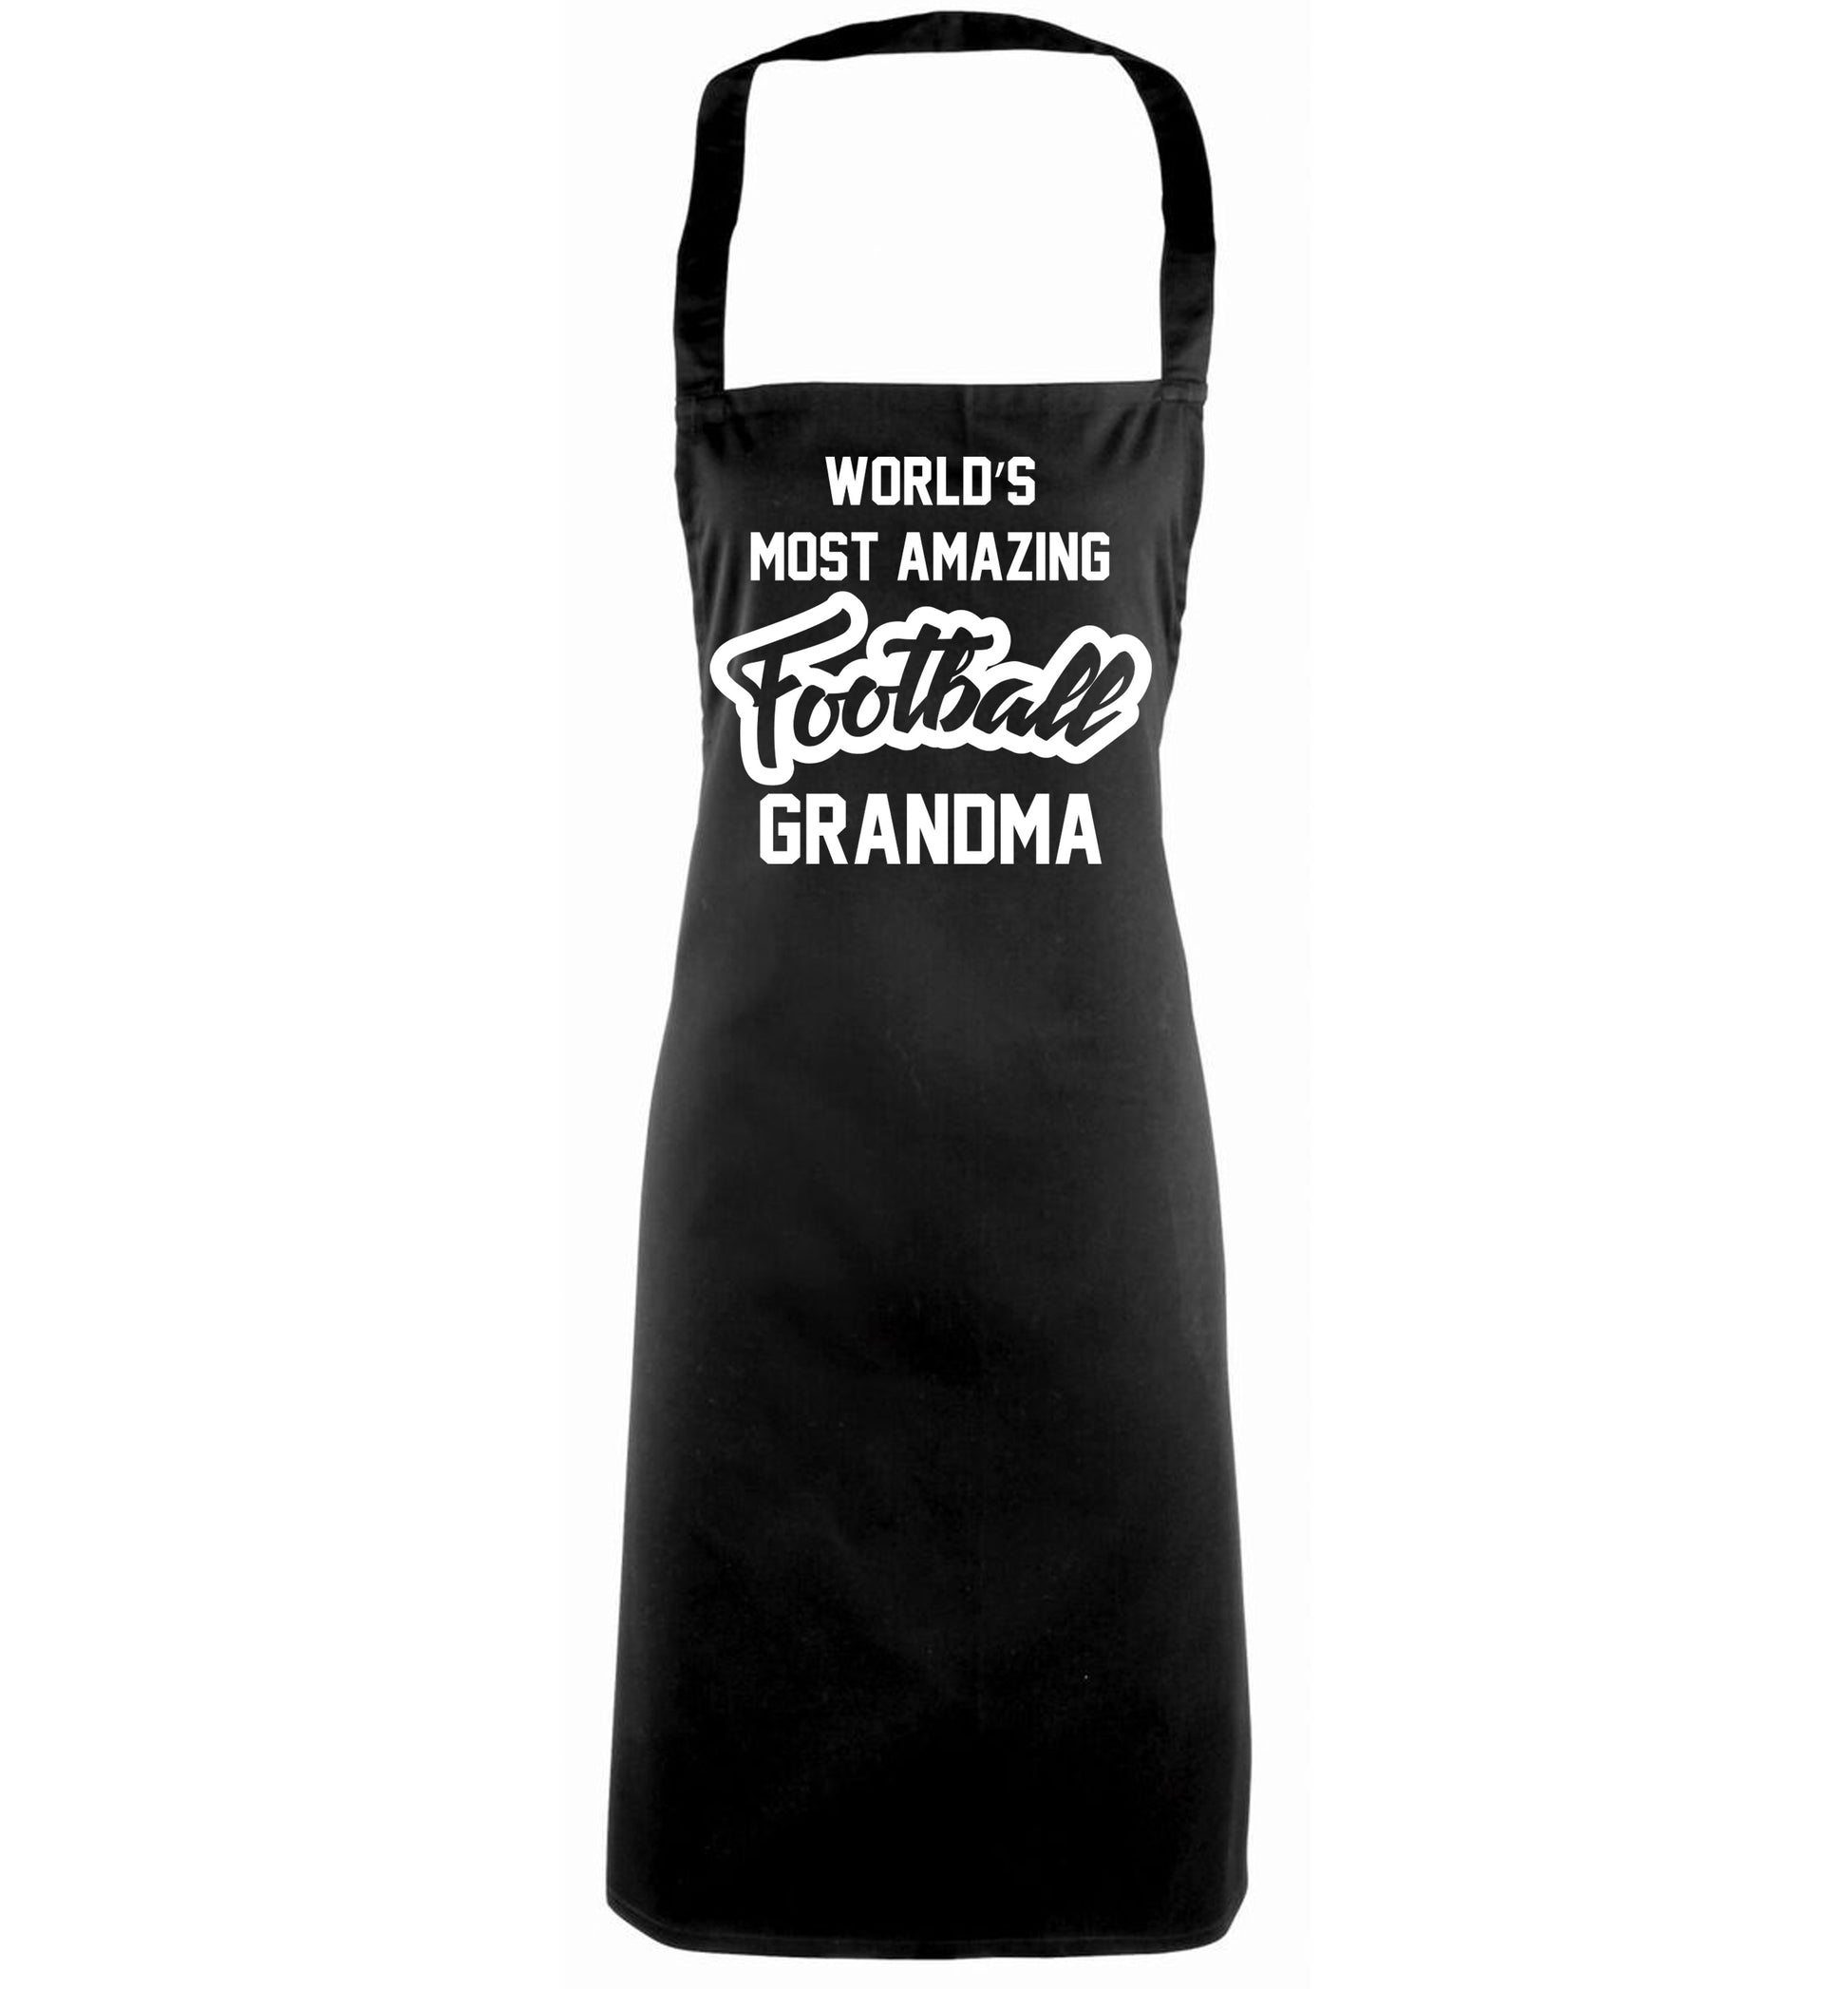 Worlds most amazing football grandma black apron